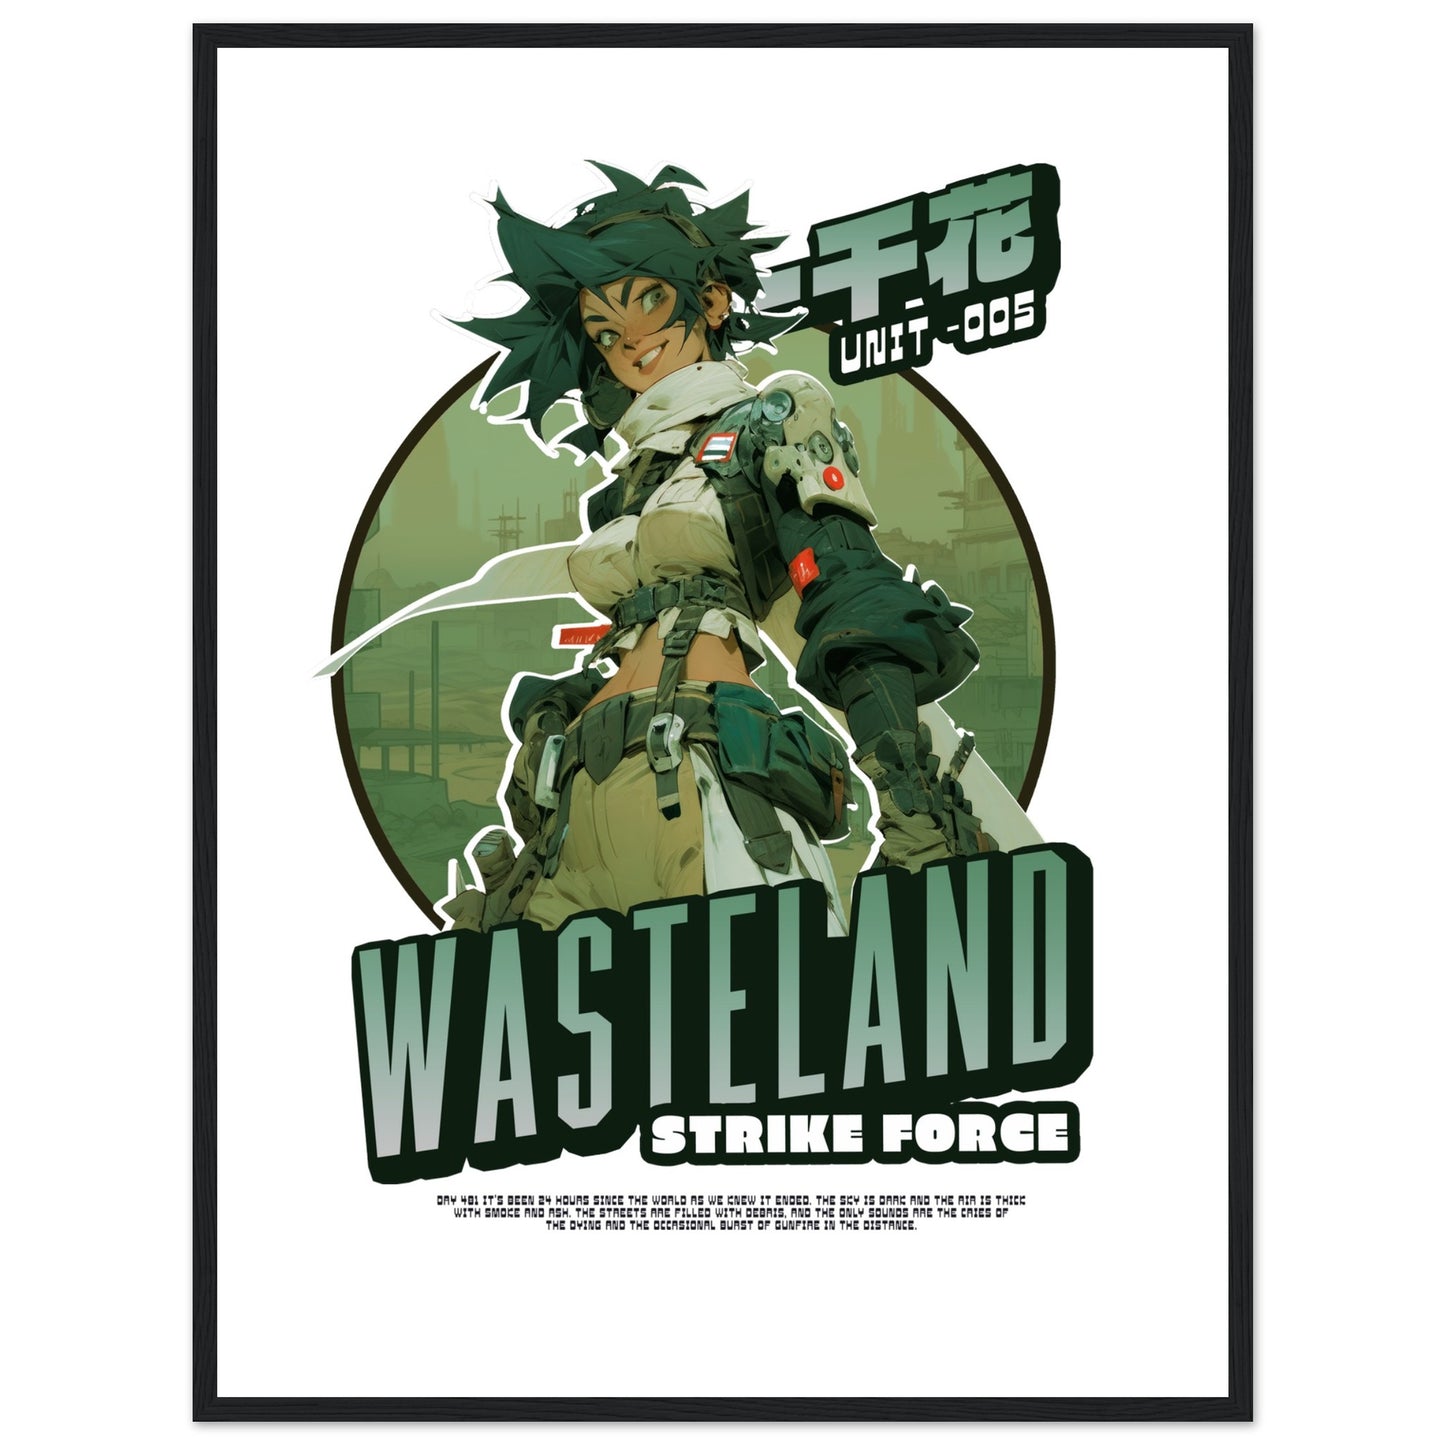 Wasteland Strike Force Unit 005 - gerahmtes Bild